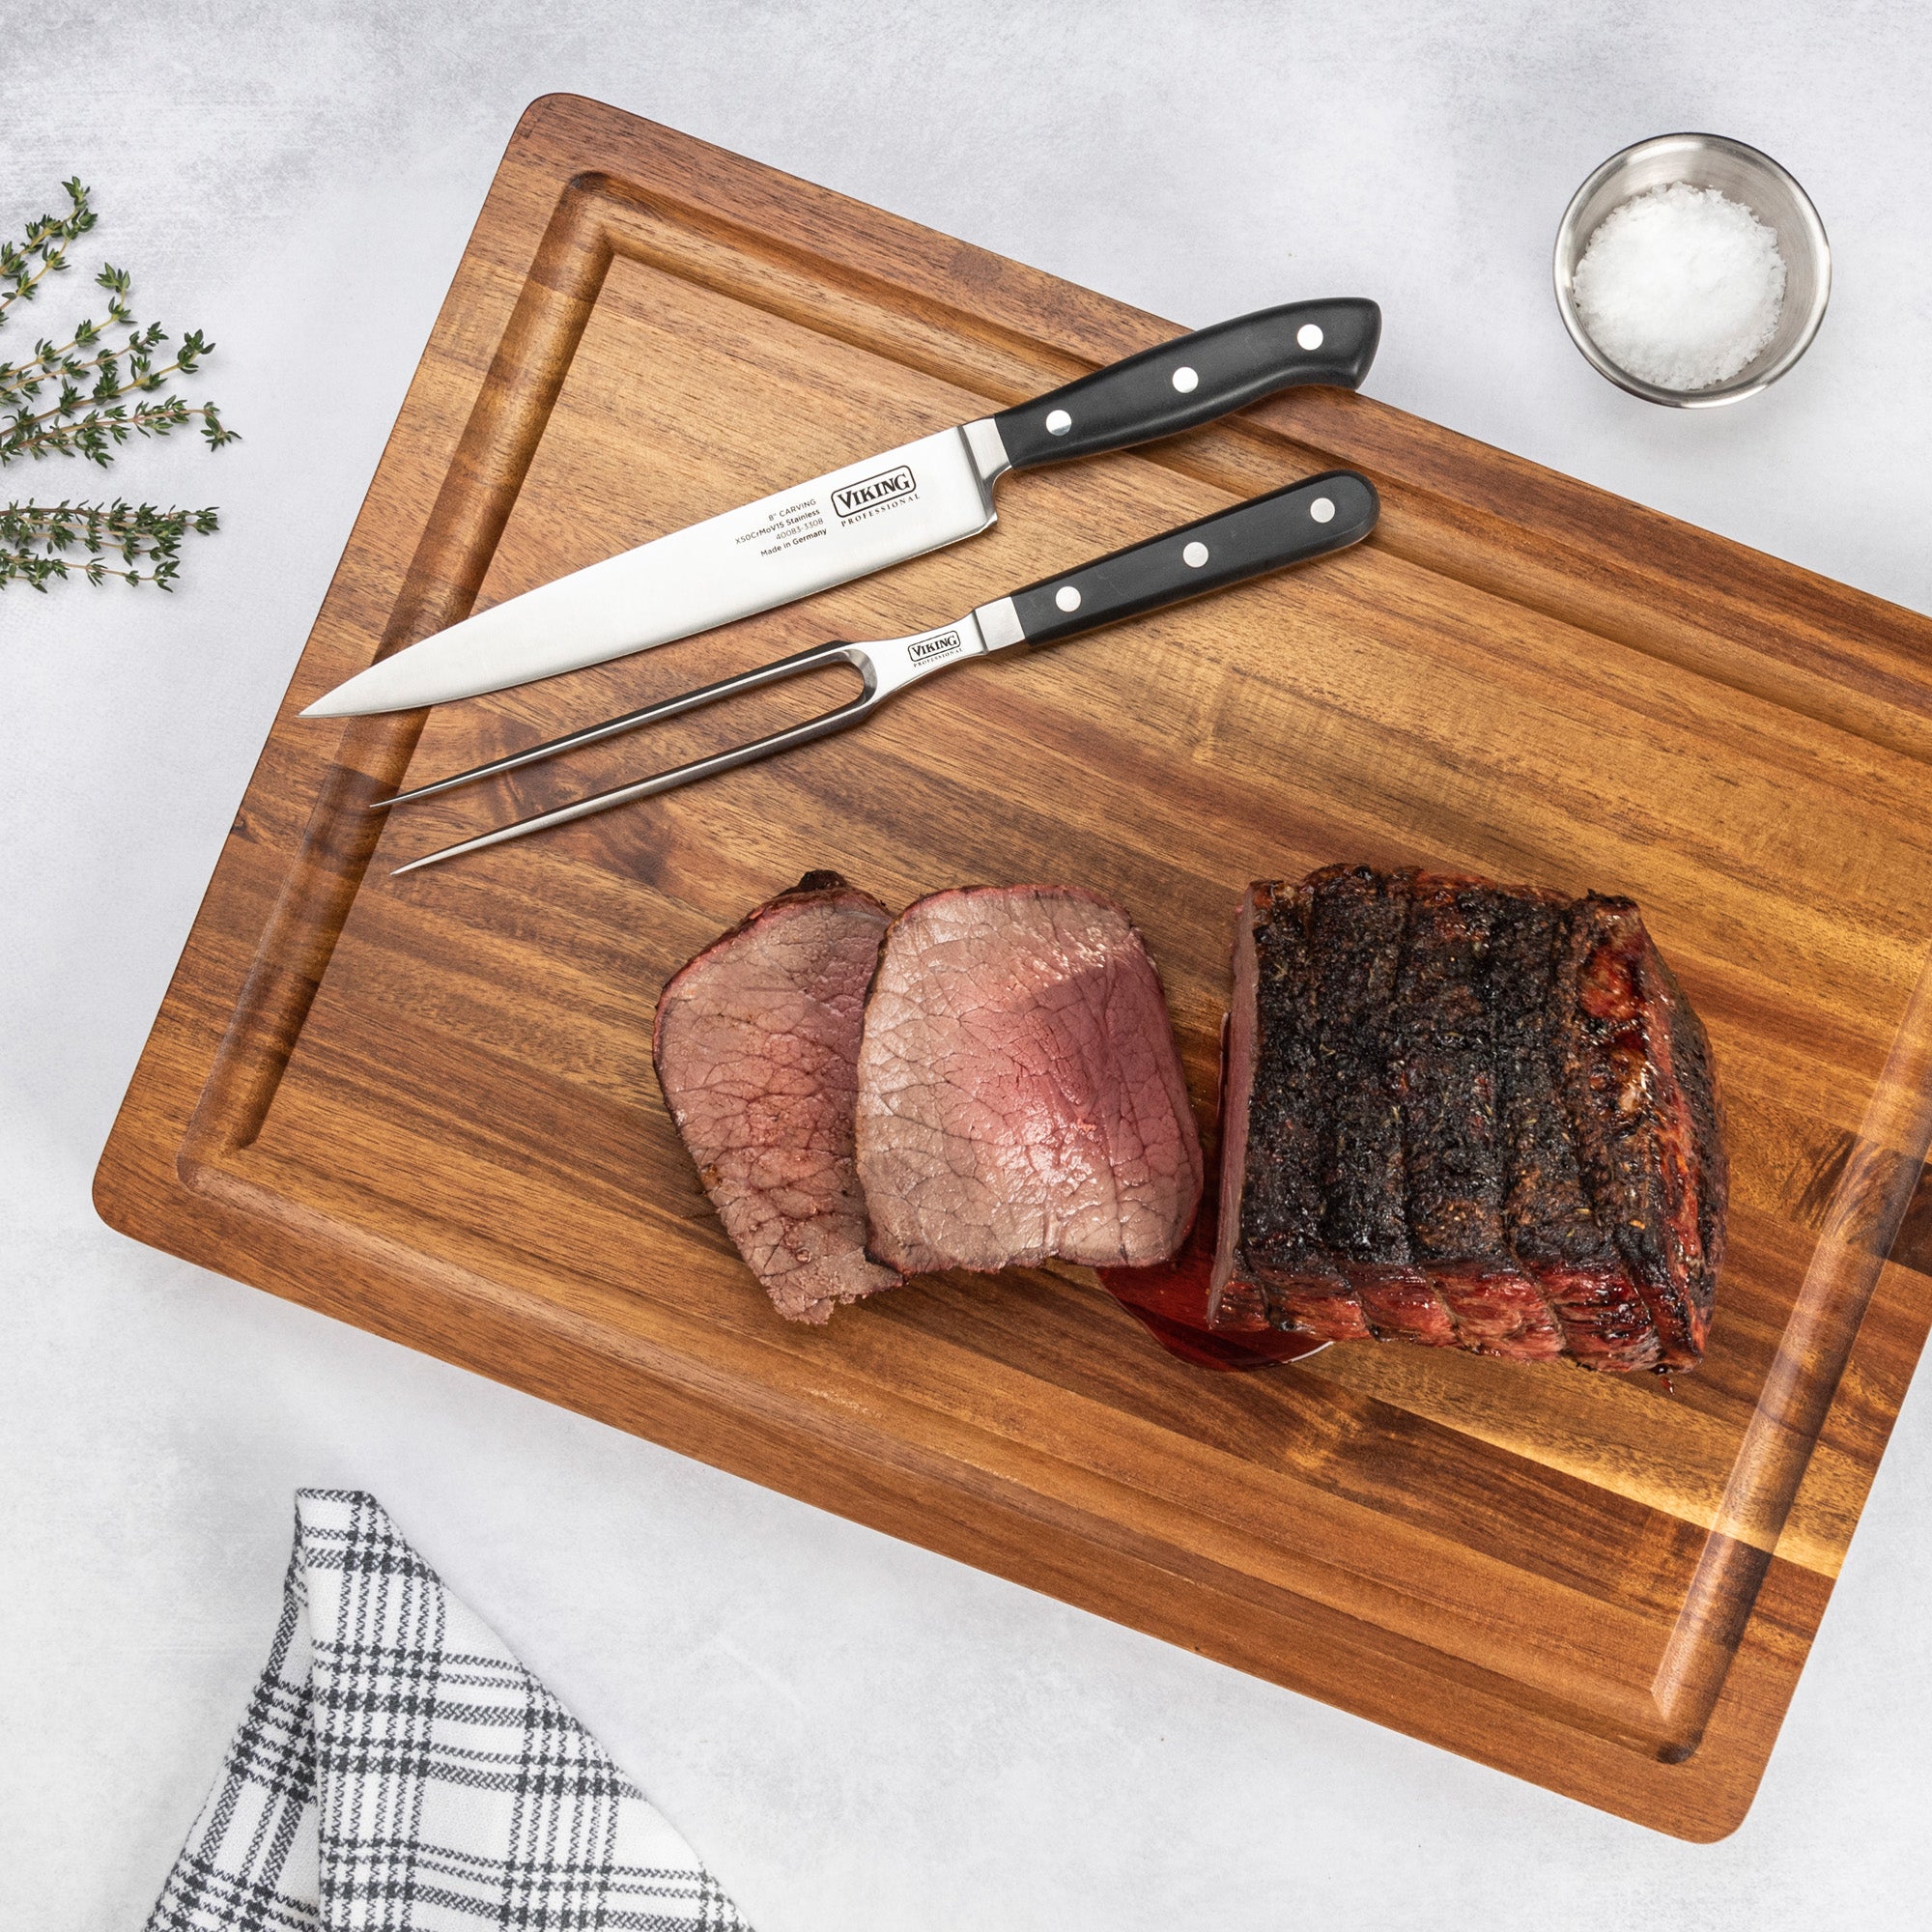 Viking Professional 4 pc Steak Knife Set